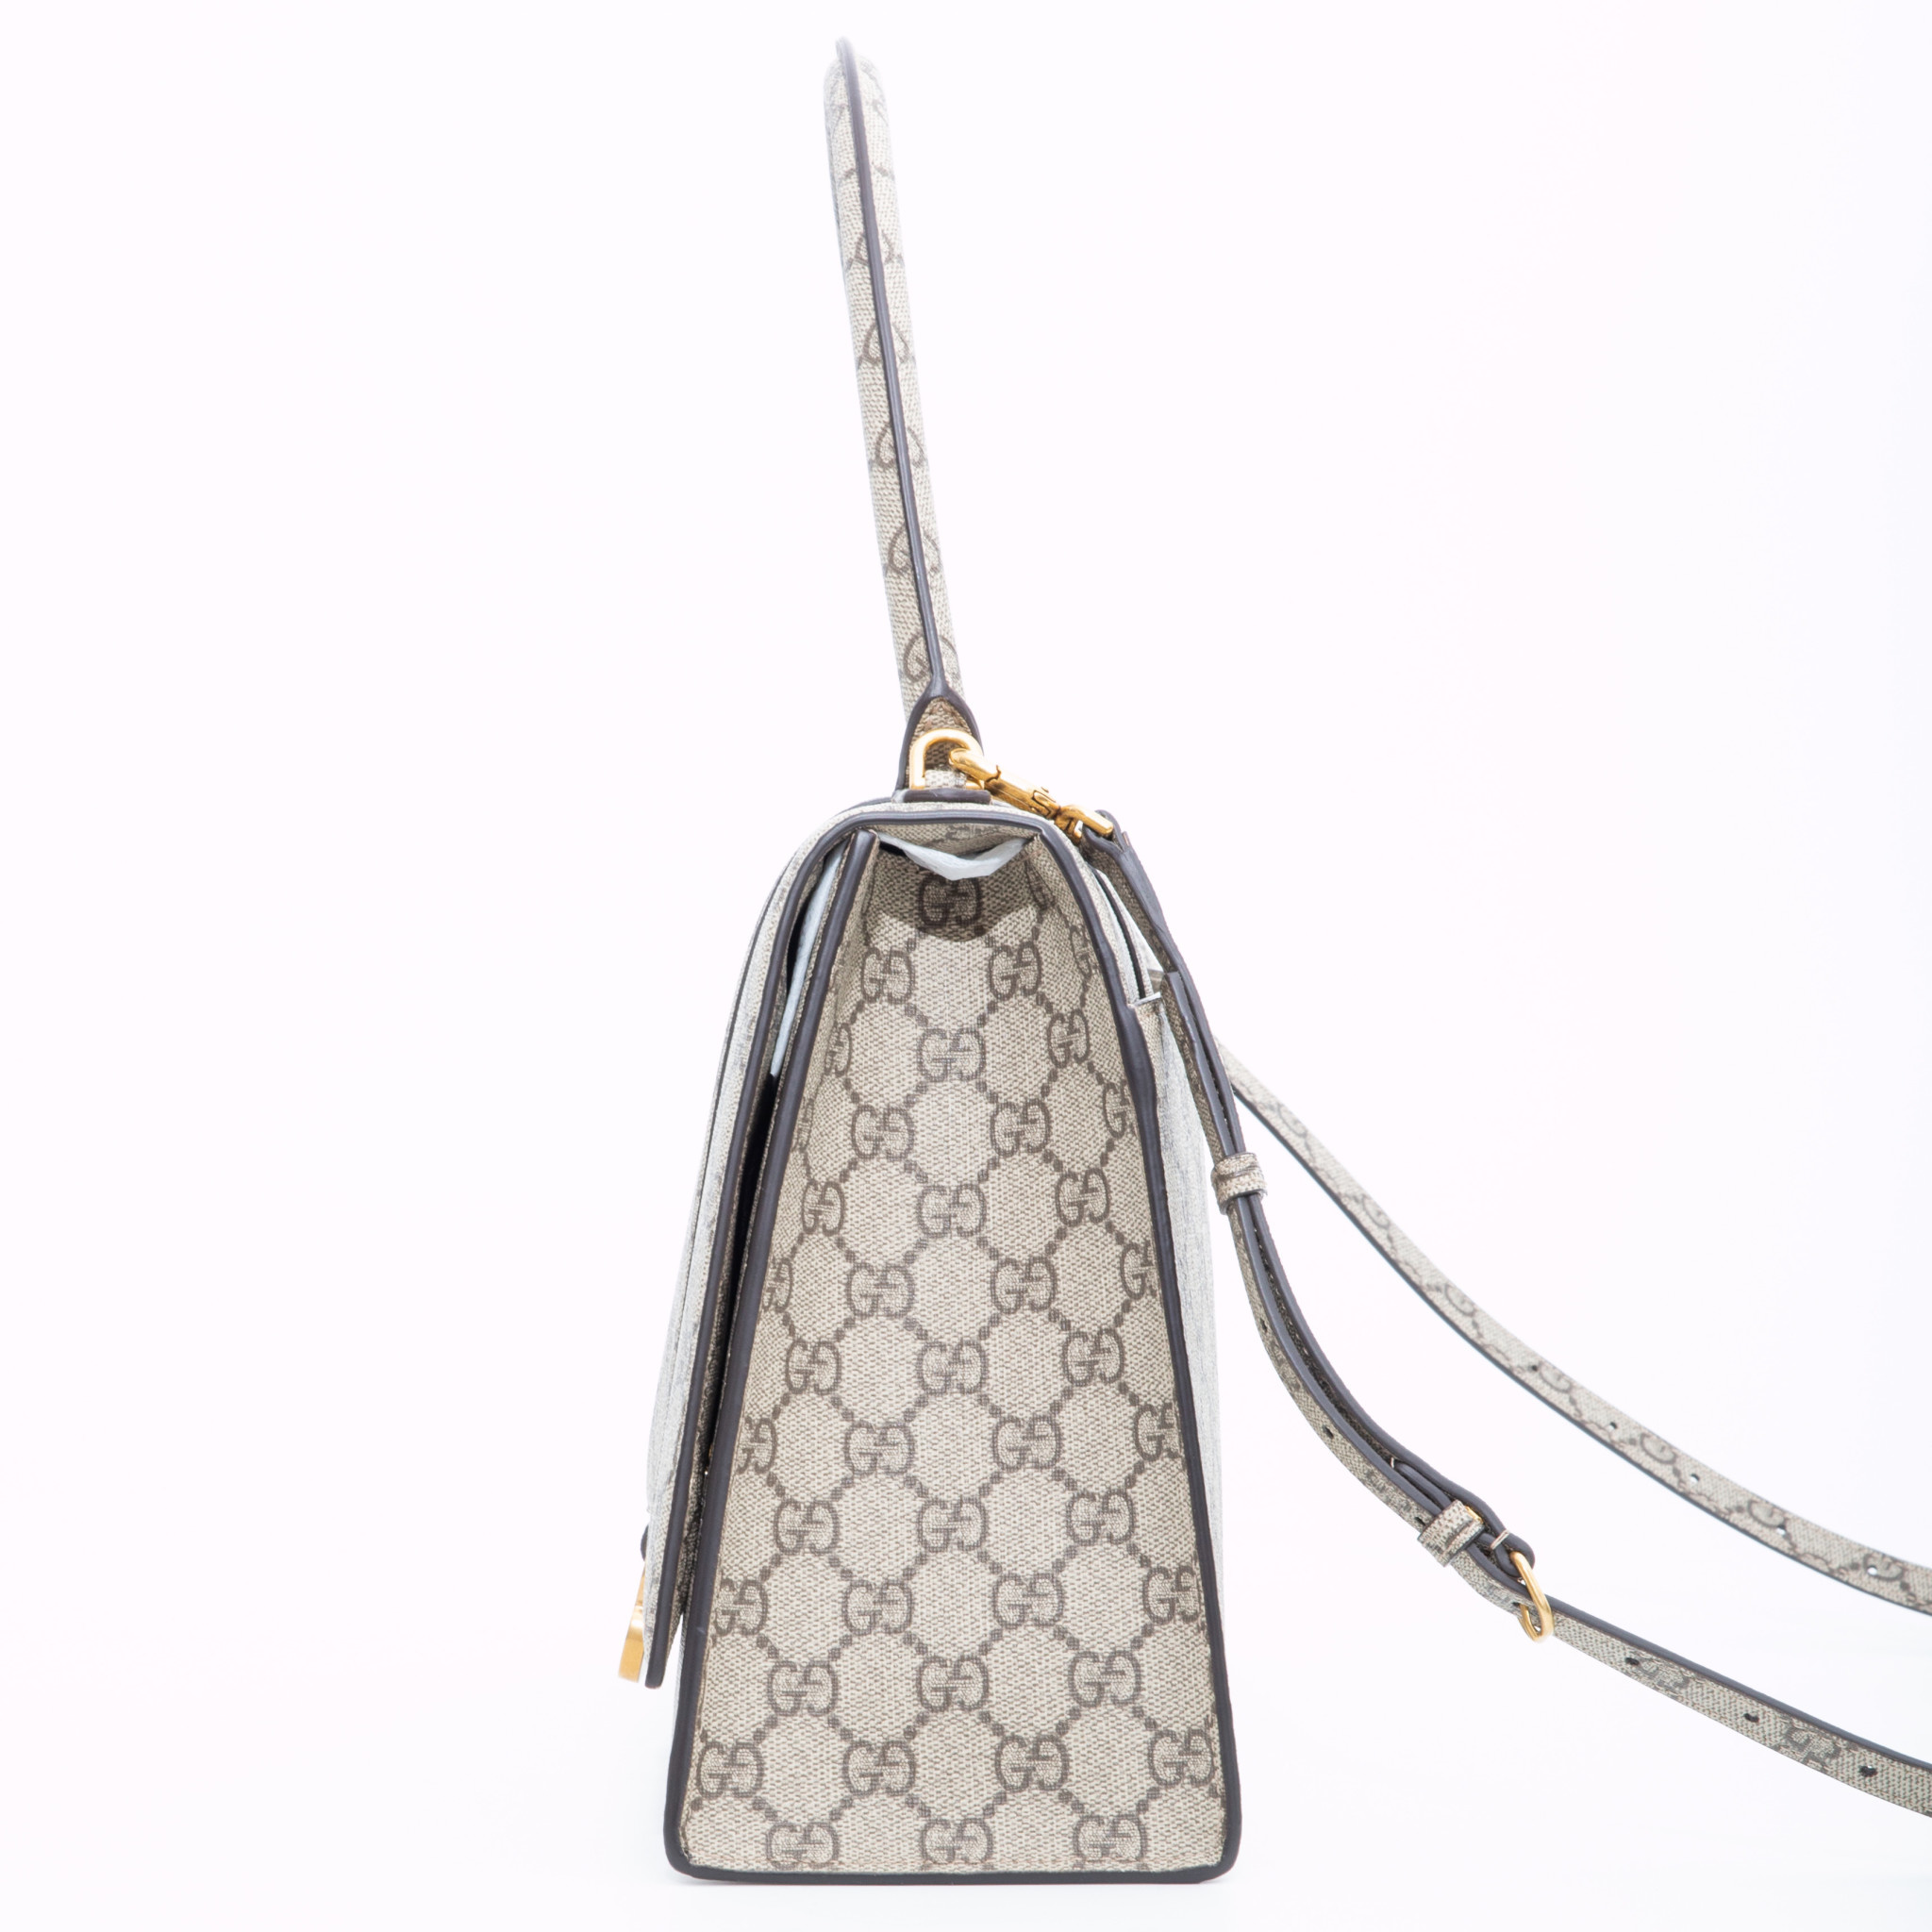 NWOT Gucci x Balenciaga The Hacker Project GG Supreme Small Hourglass Bag